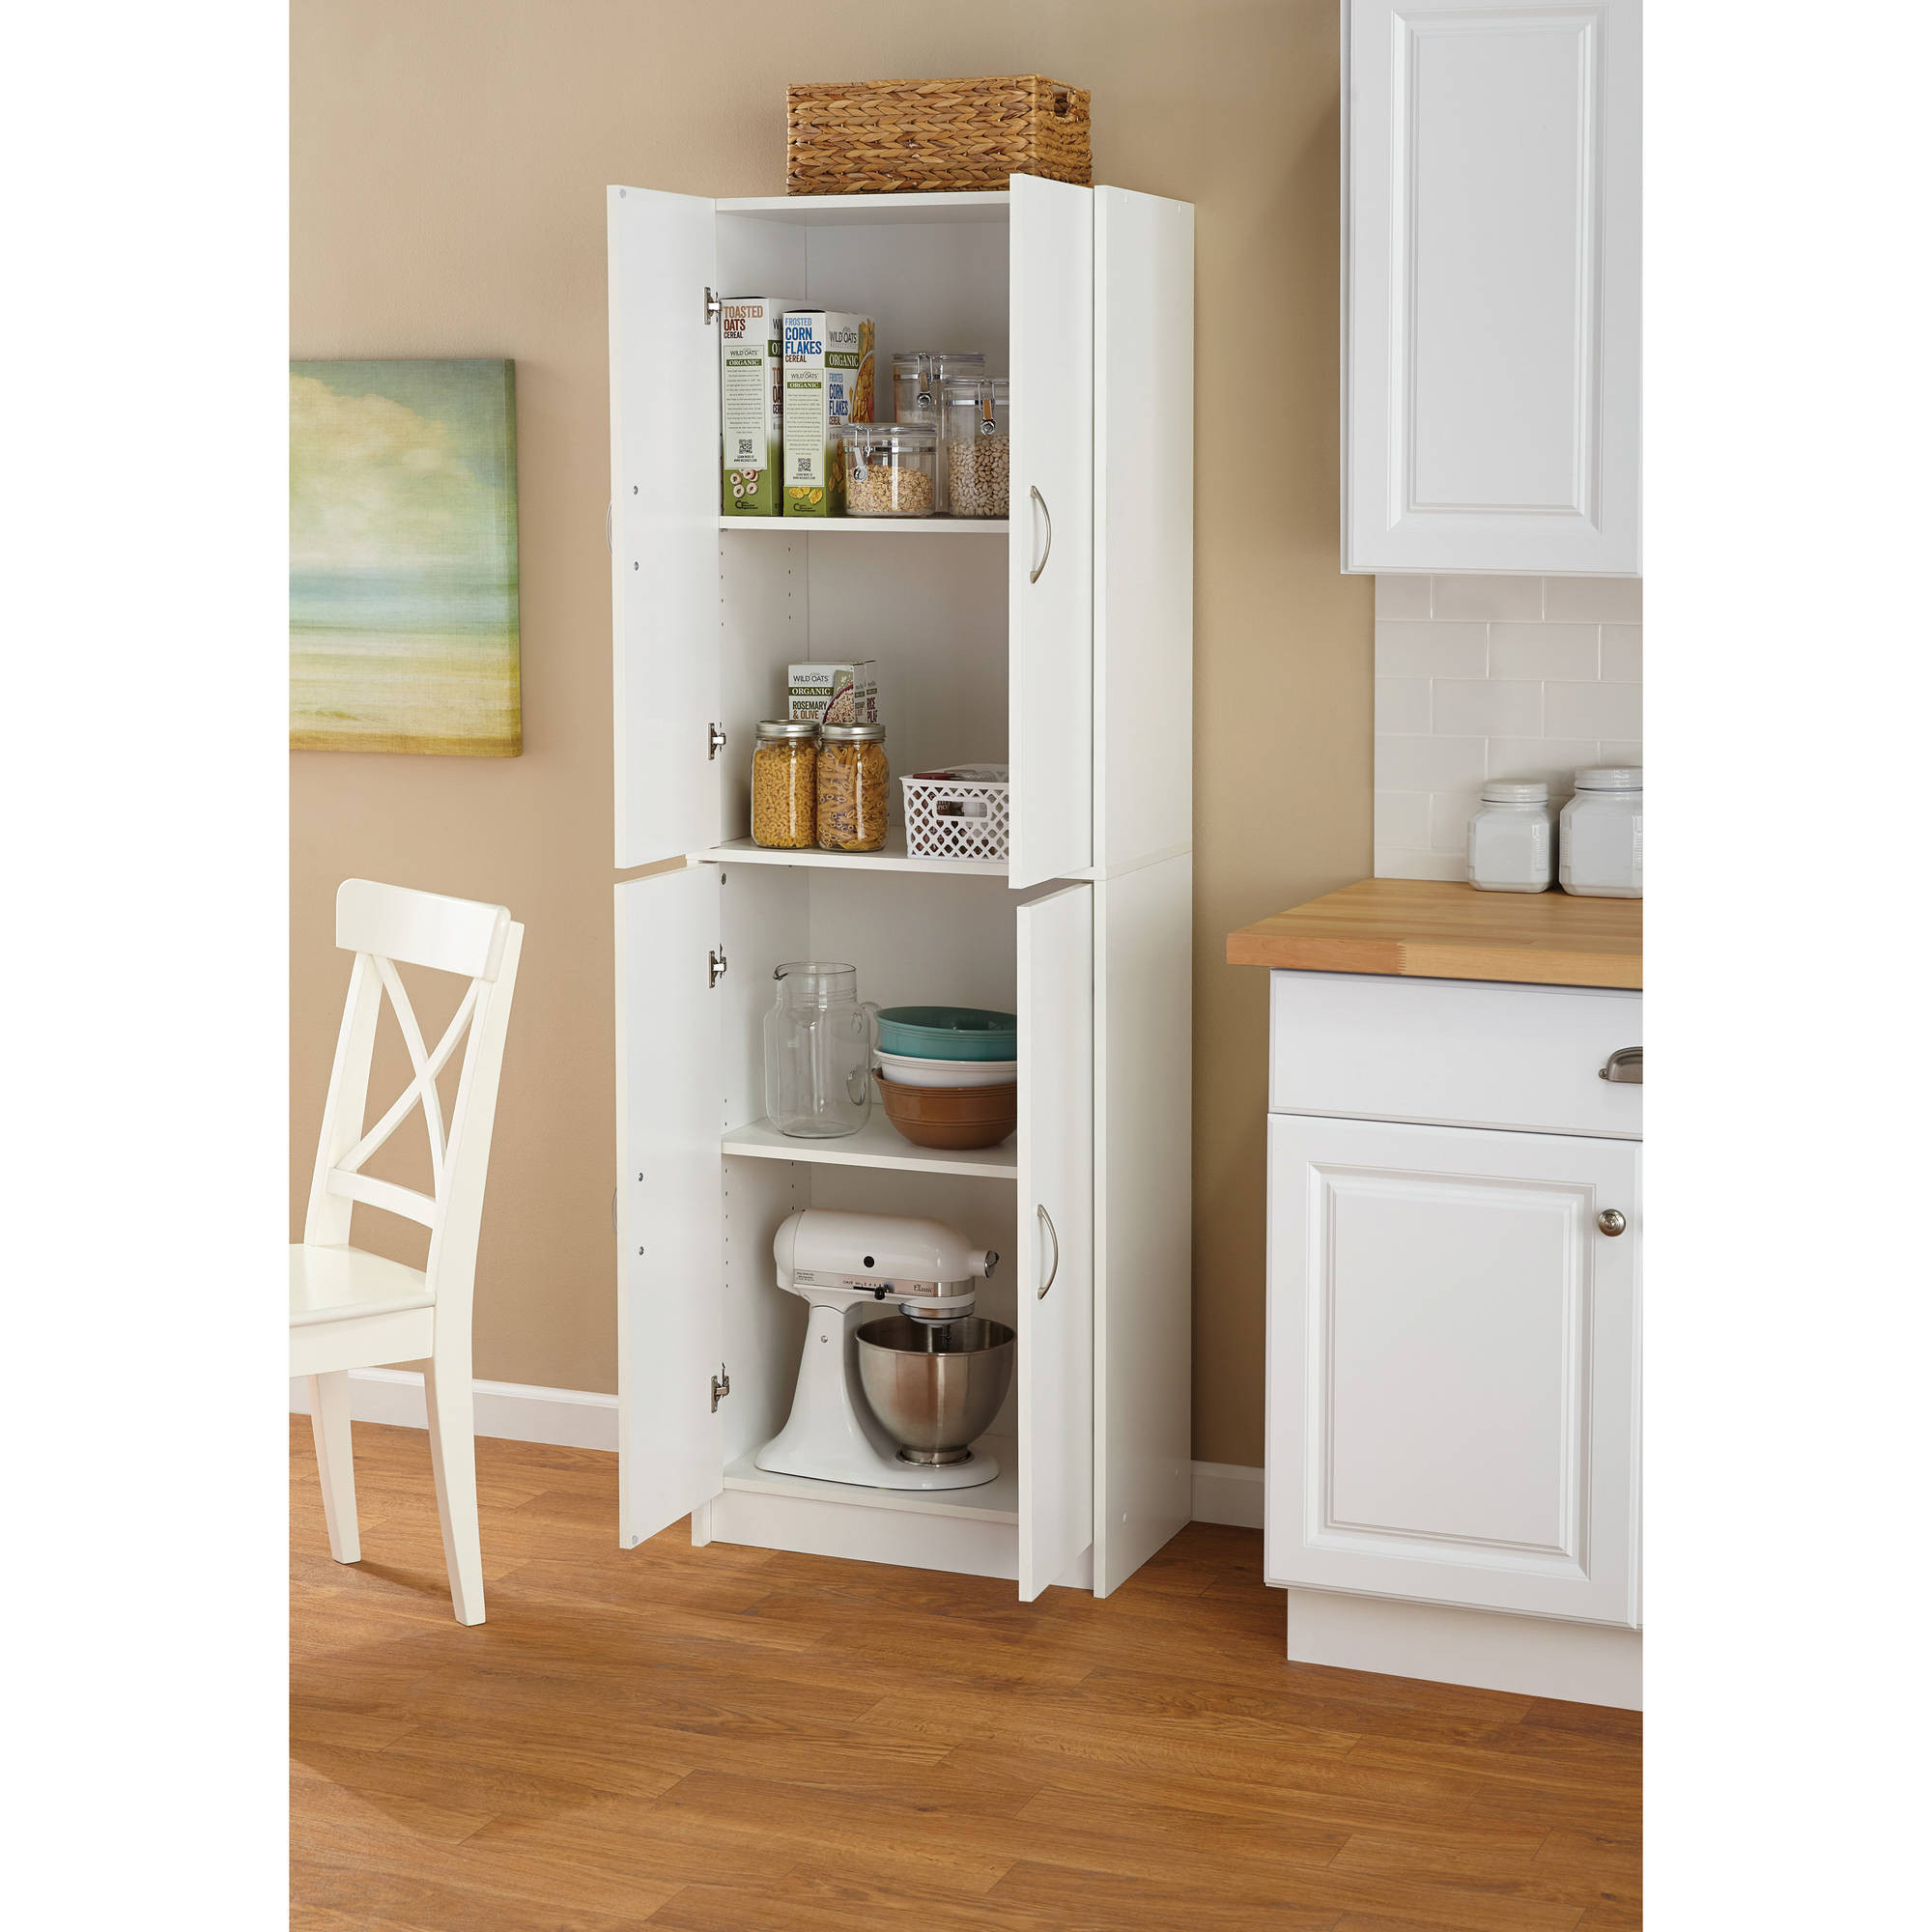 Extra Storage Cabinet For Kitchen
 Tall Storage Cabinet Kitchen Cupboard Pantry Food Storage